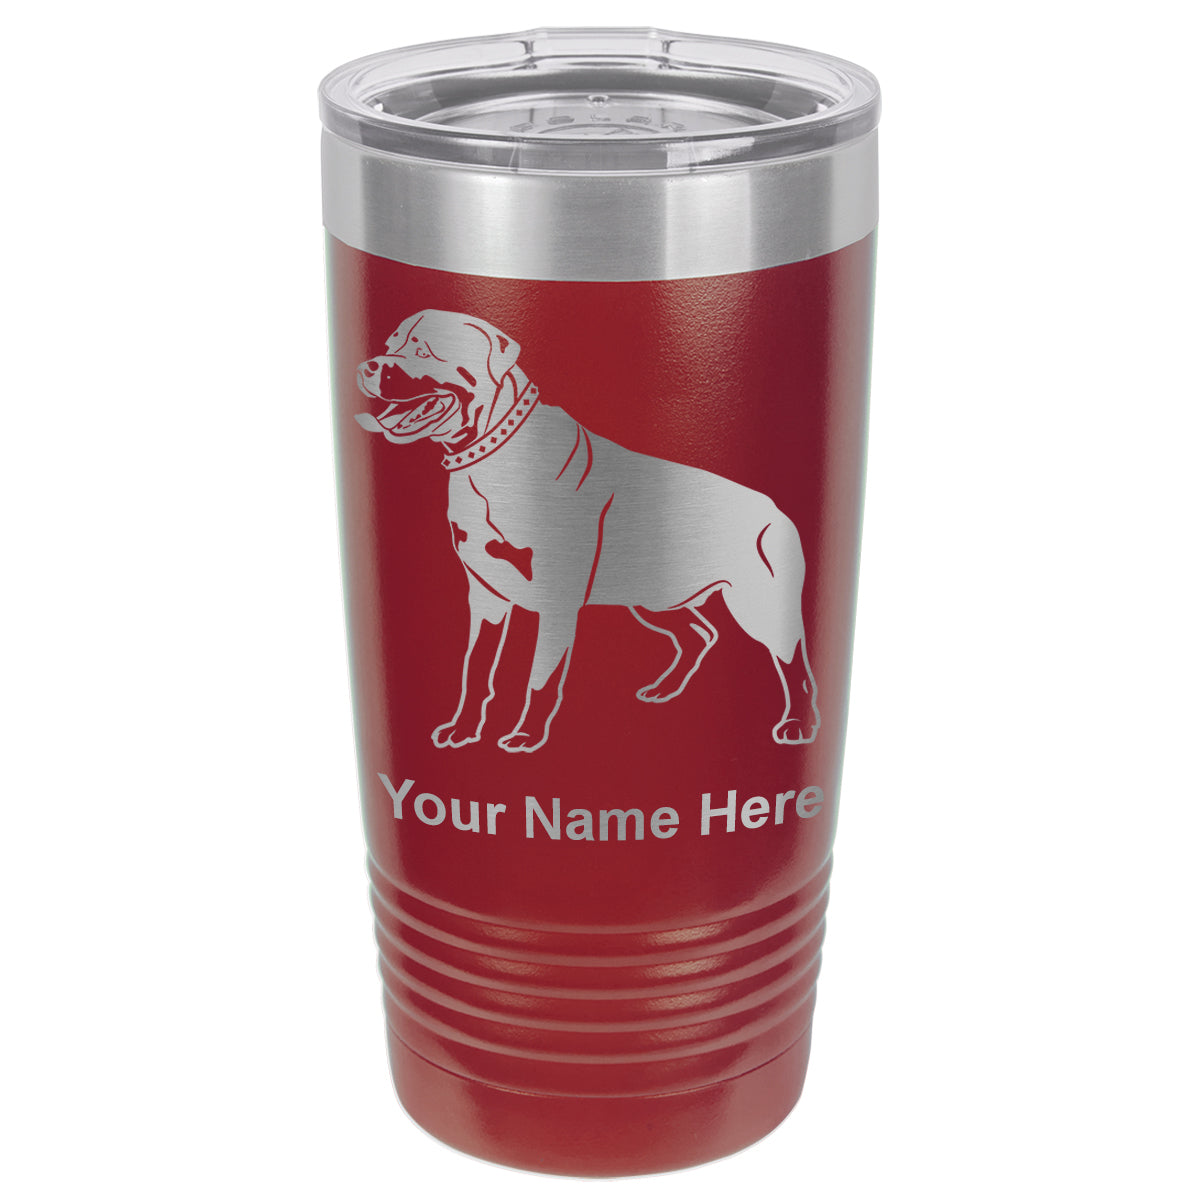 20oz Vacuum Insulated Tumbler Mug, Rottweiler Dog, Personalized Engraving Included